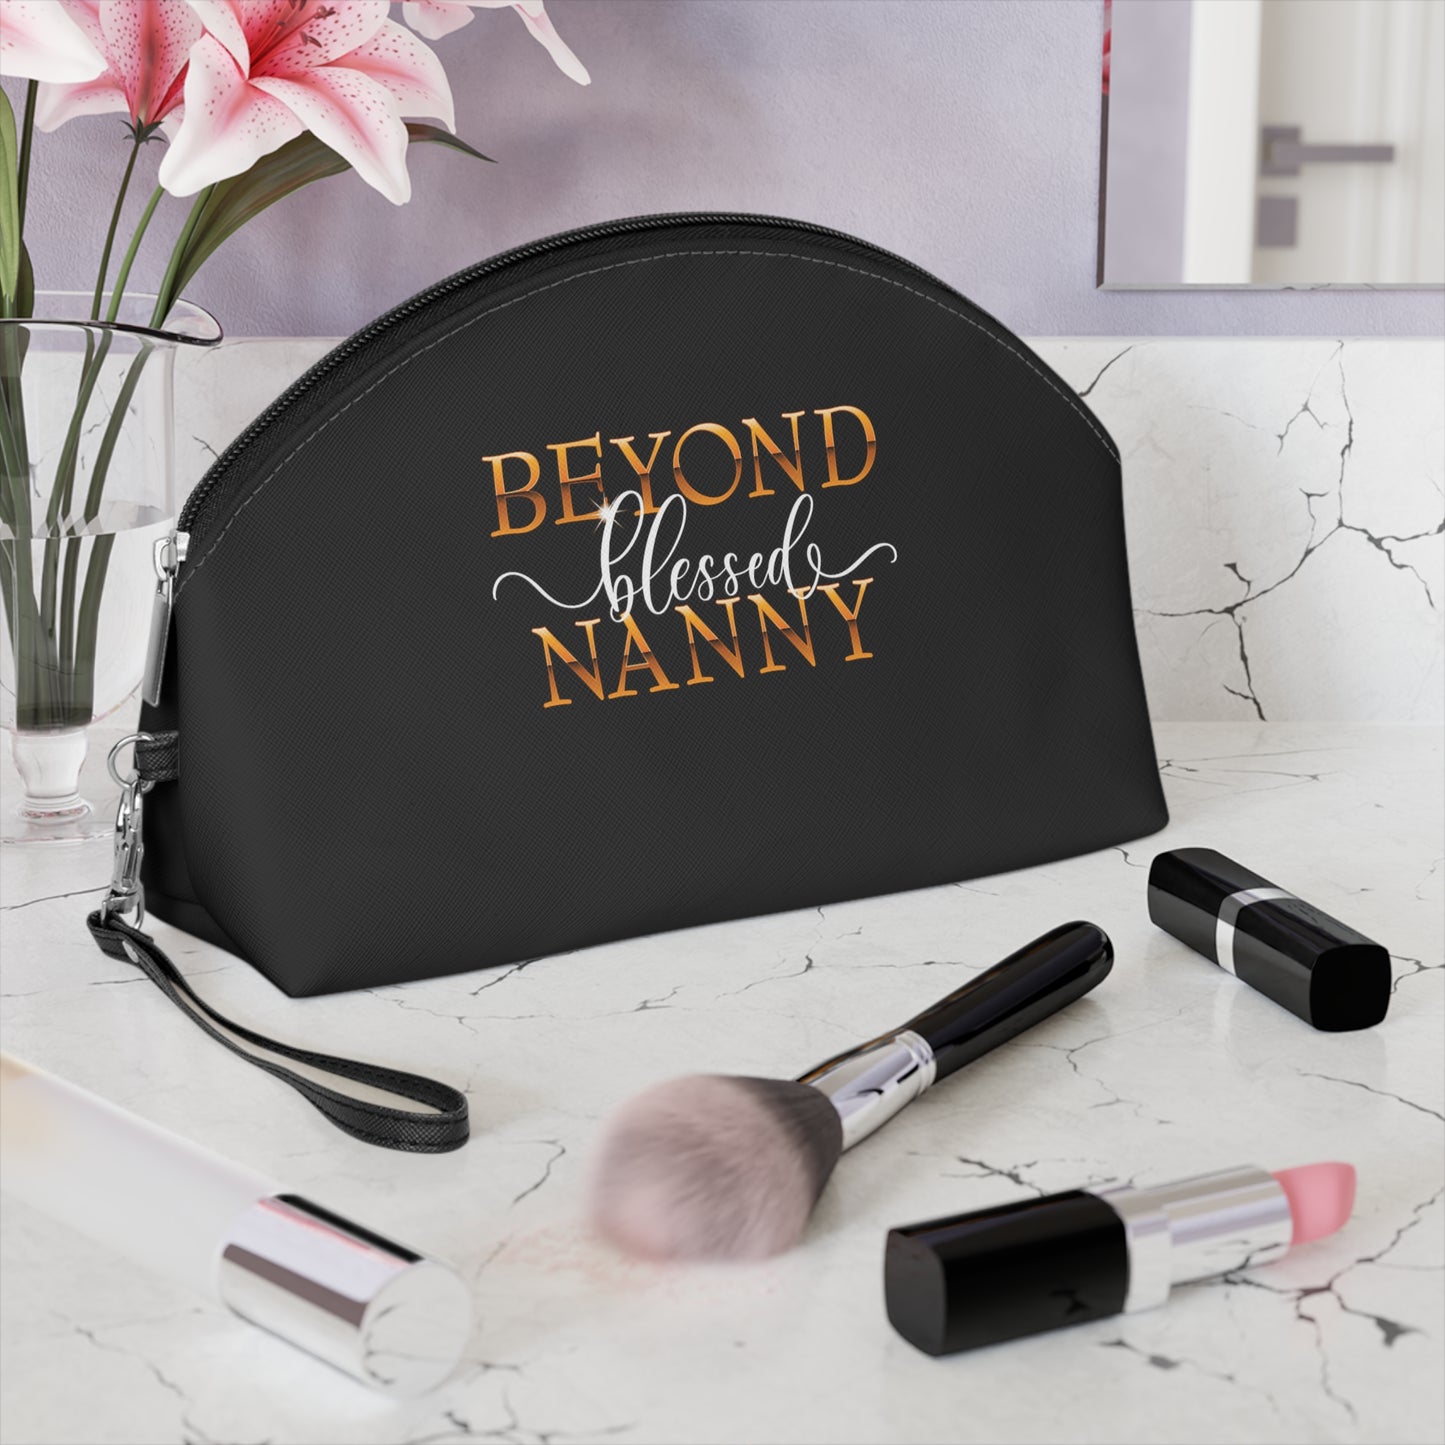 Beyond Blessed Nanny - White - Makeup Bag